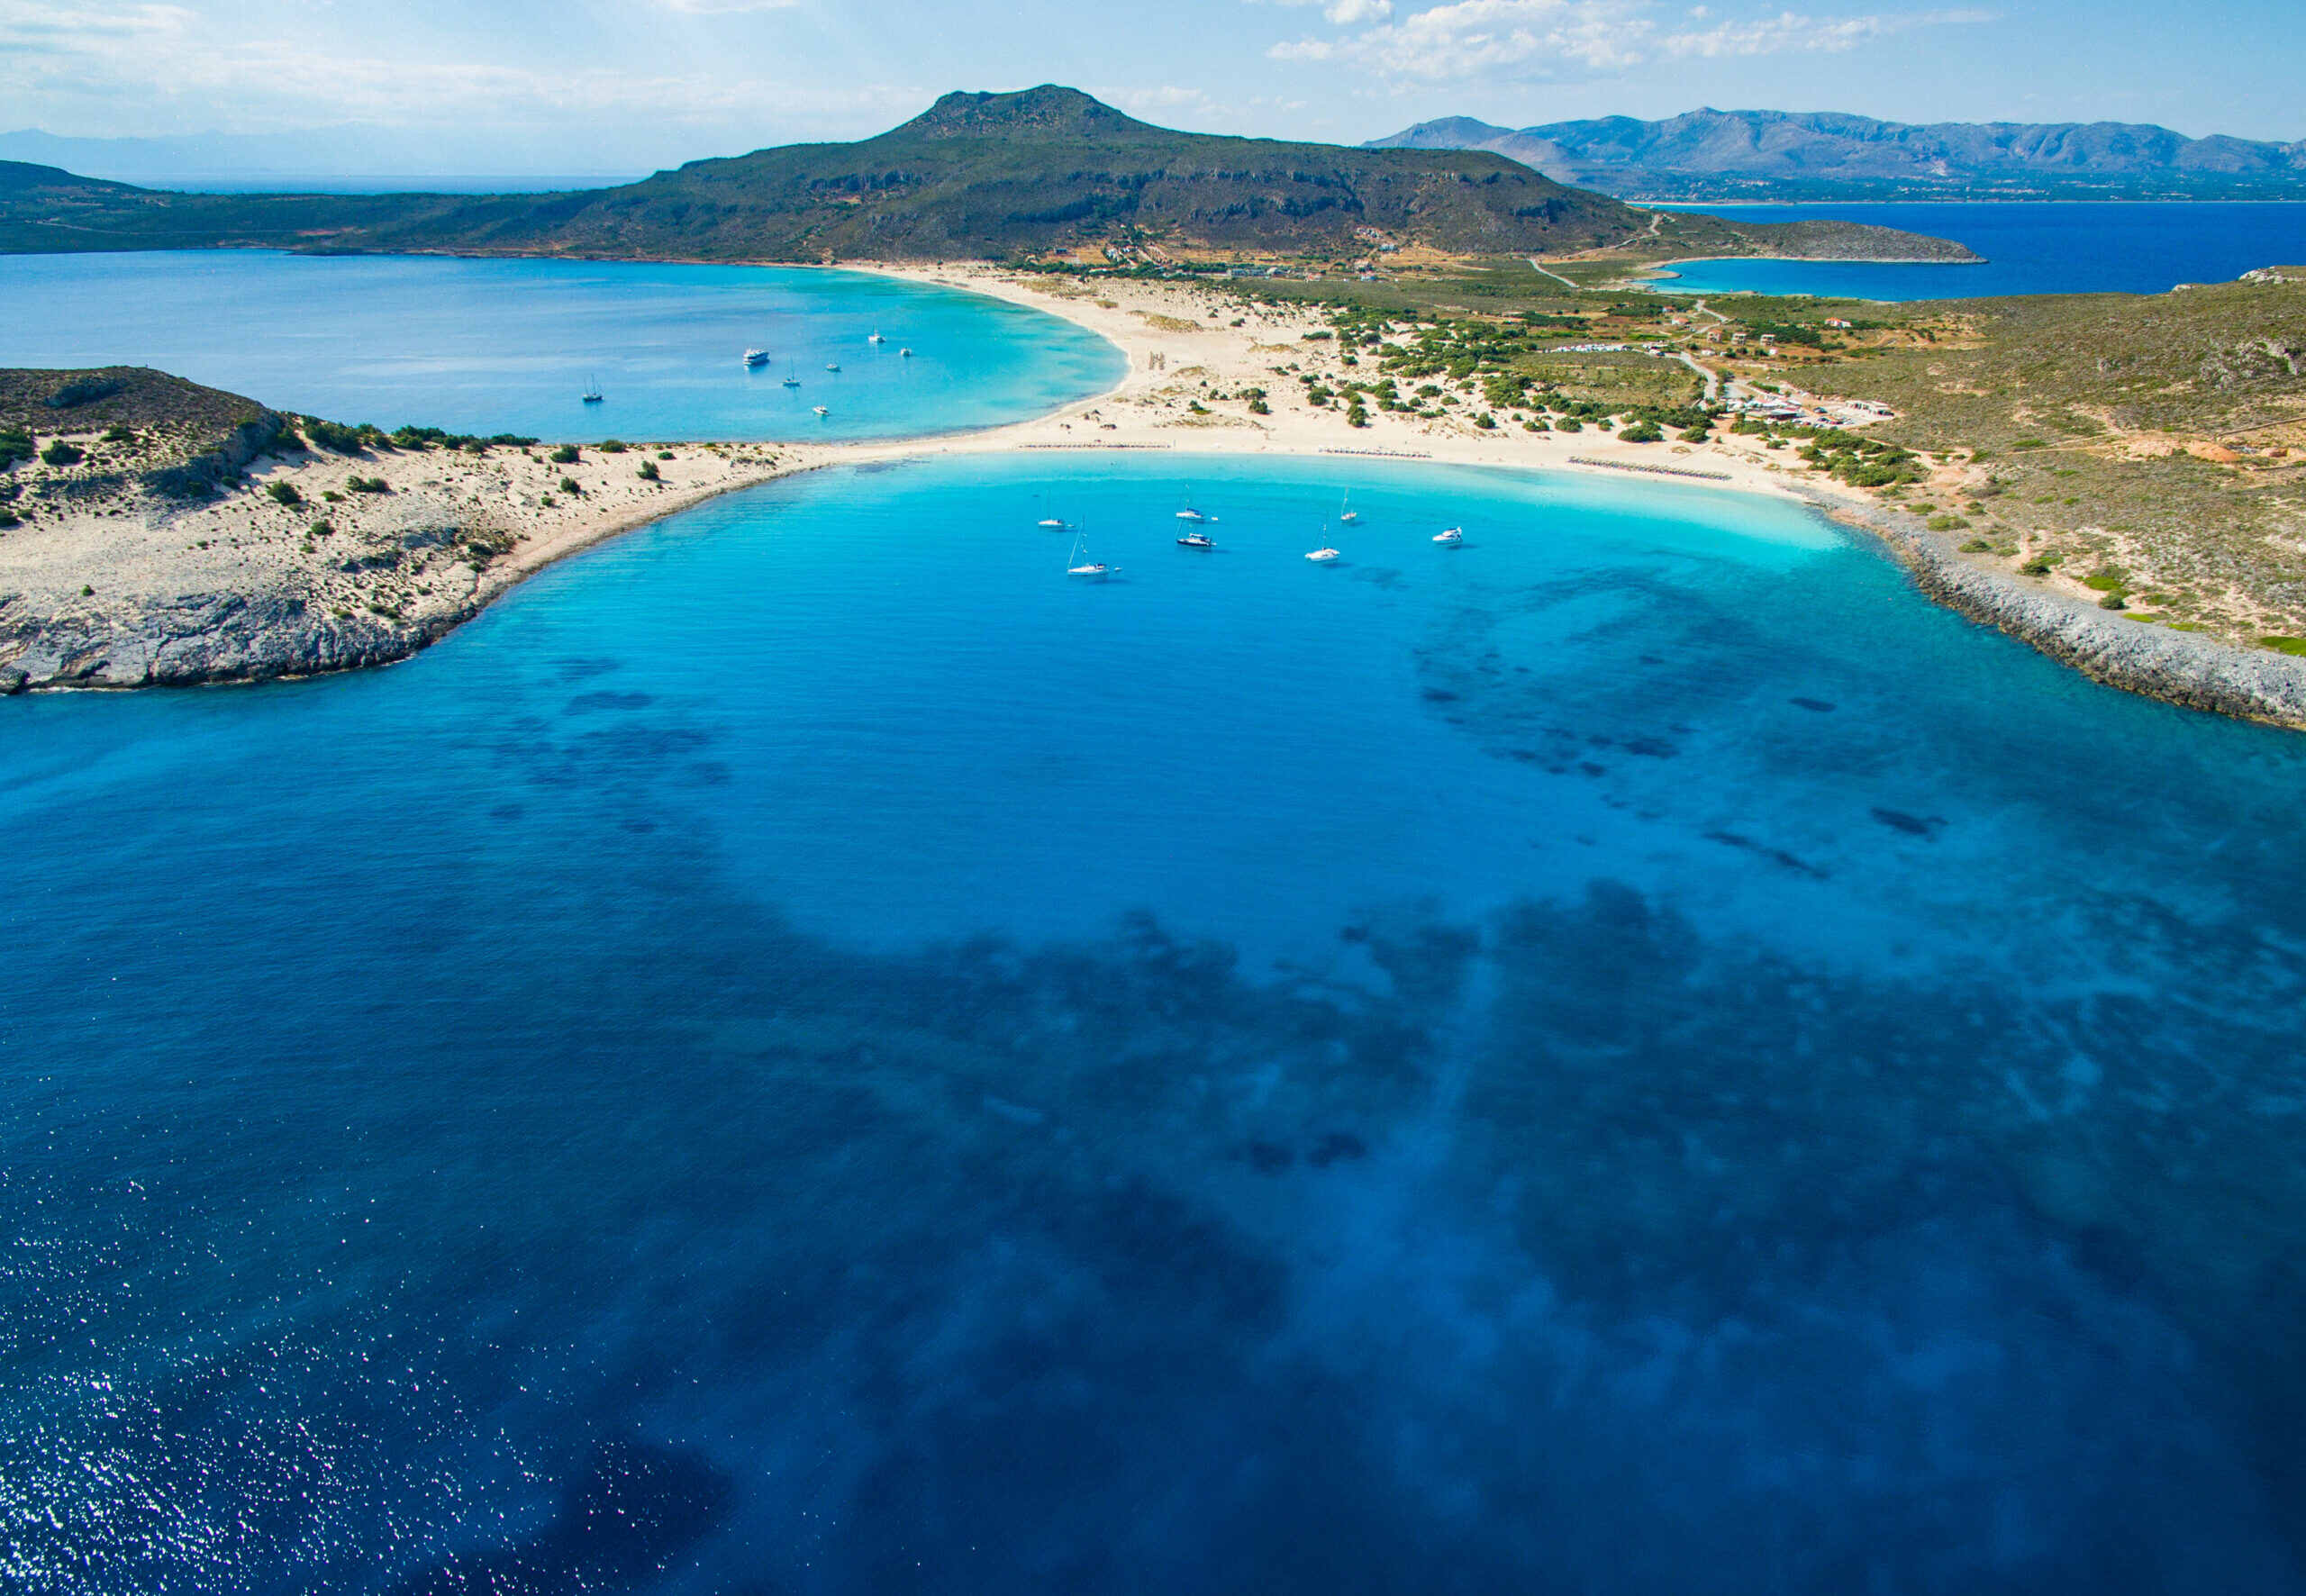 Simos: 1.5 km turquoise beach and white sand